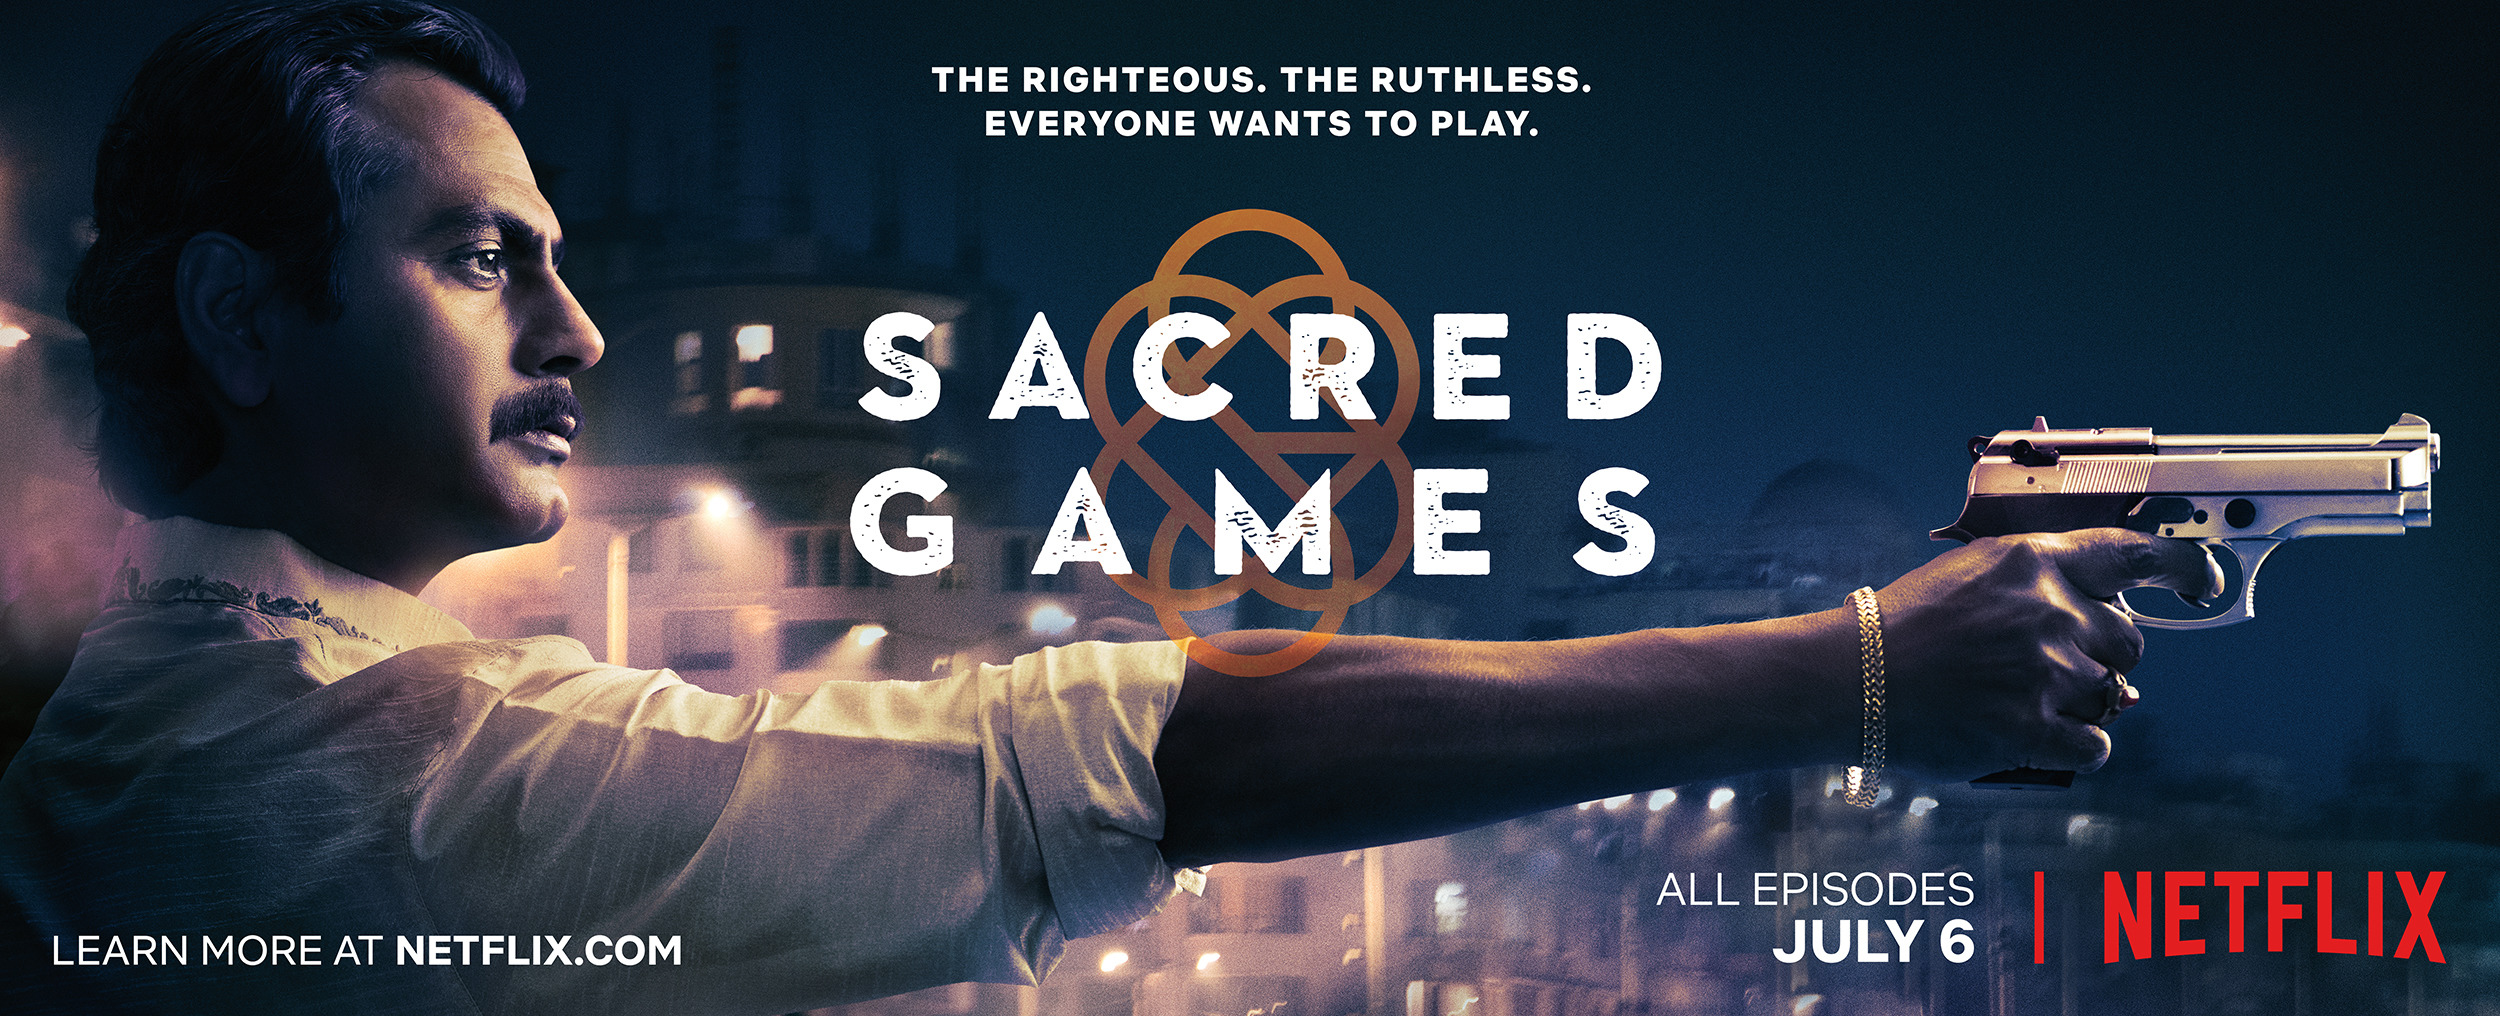 Mega Sized TV Poster Image for Sacred Games (#11 of 20)